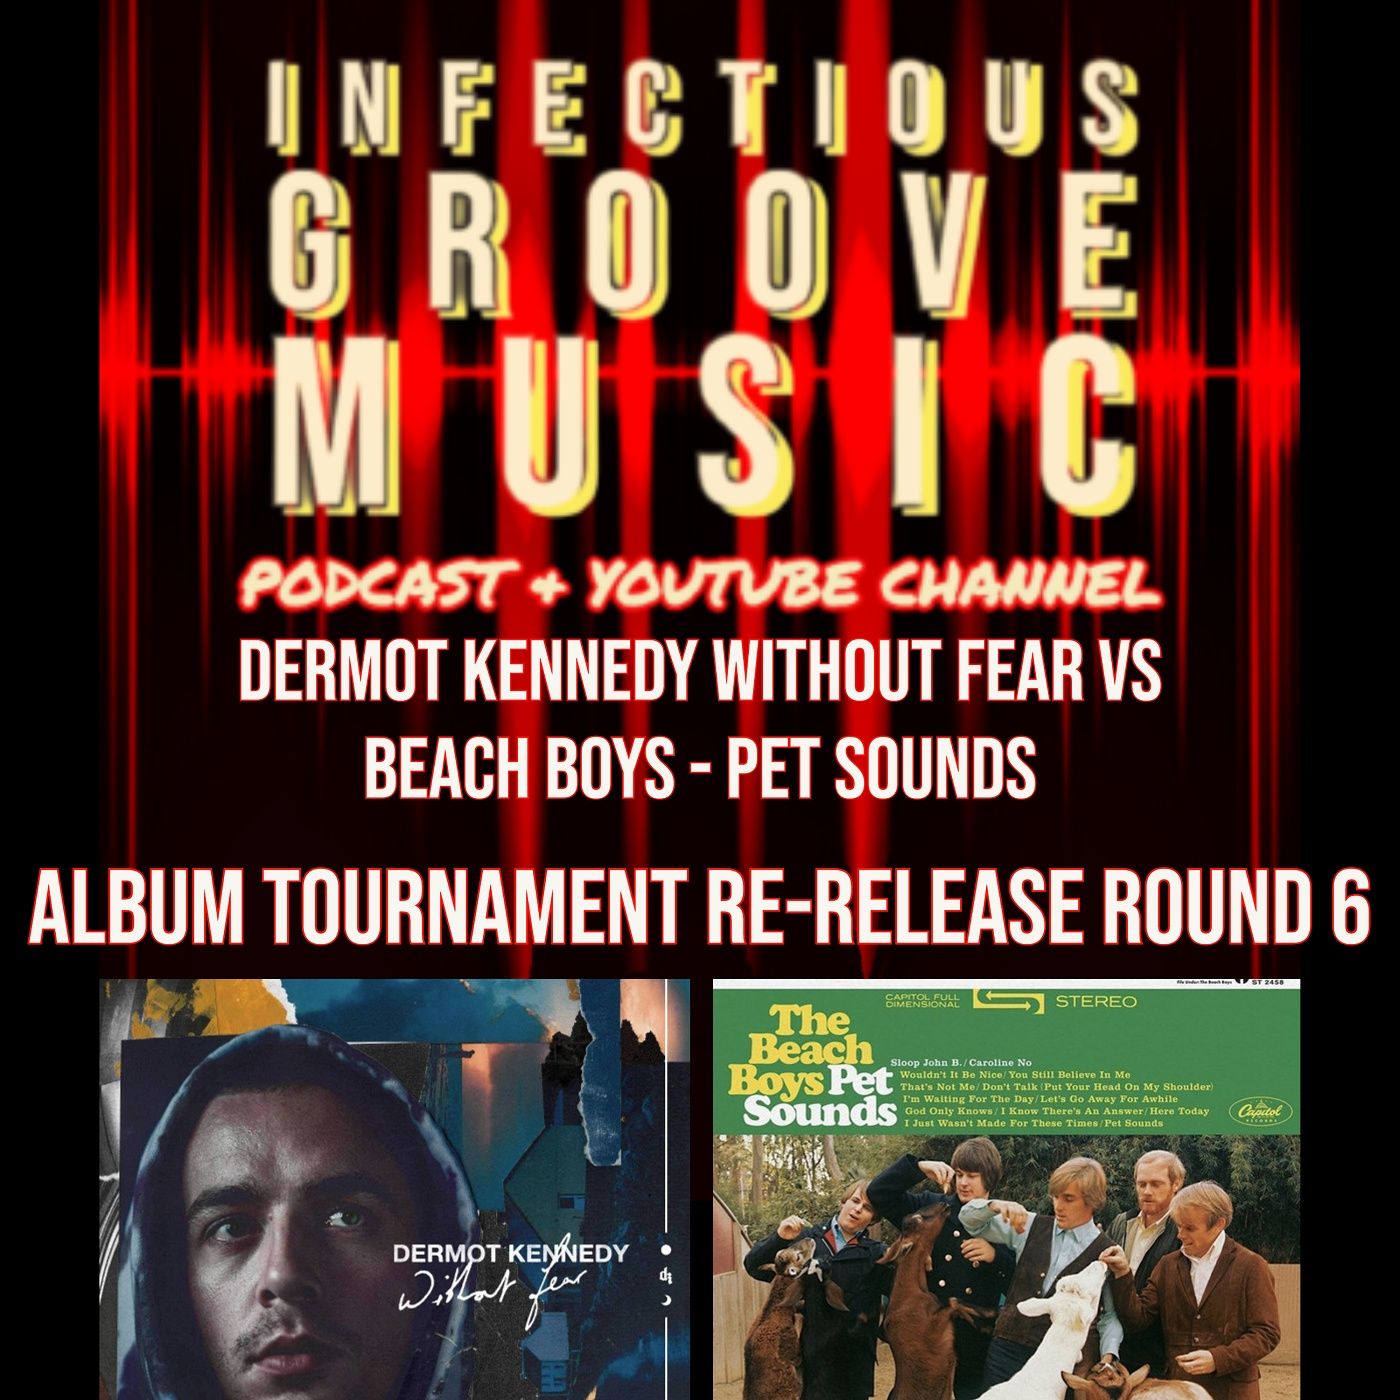 Album Tournament Re-Release Round 6 - Dermot Kennedy Vs Beach Boys